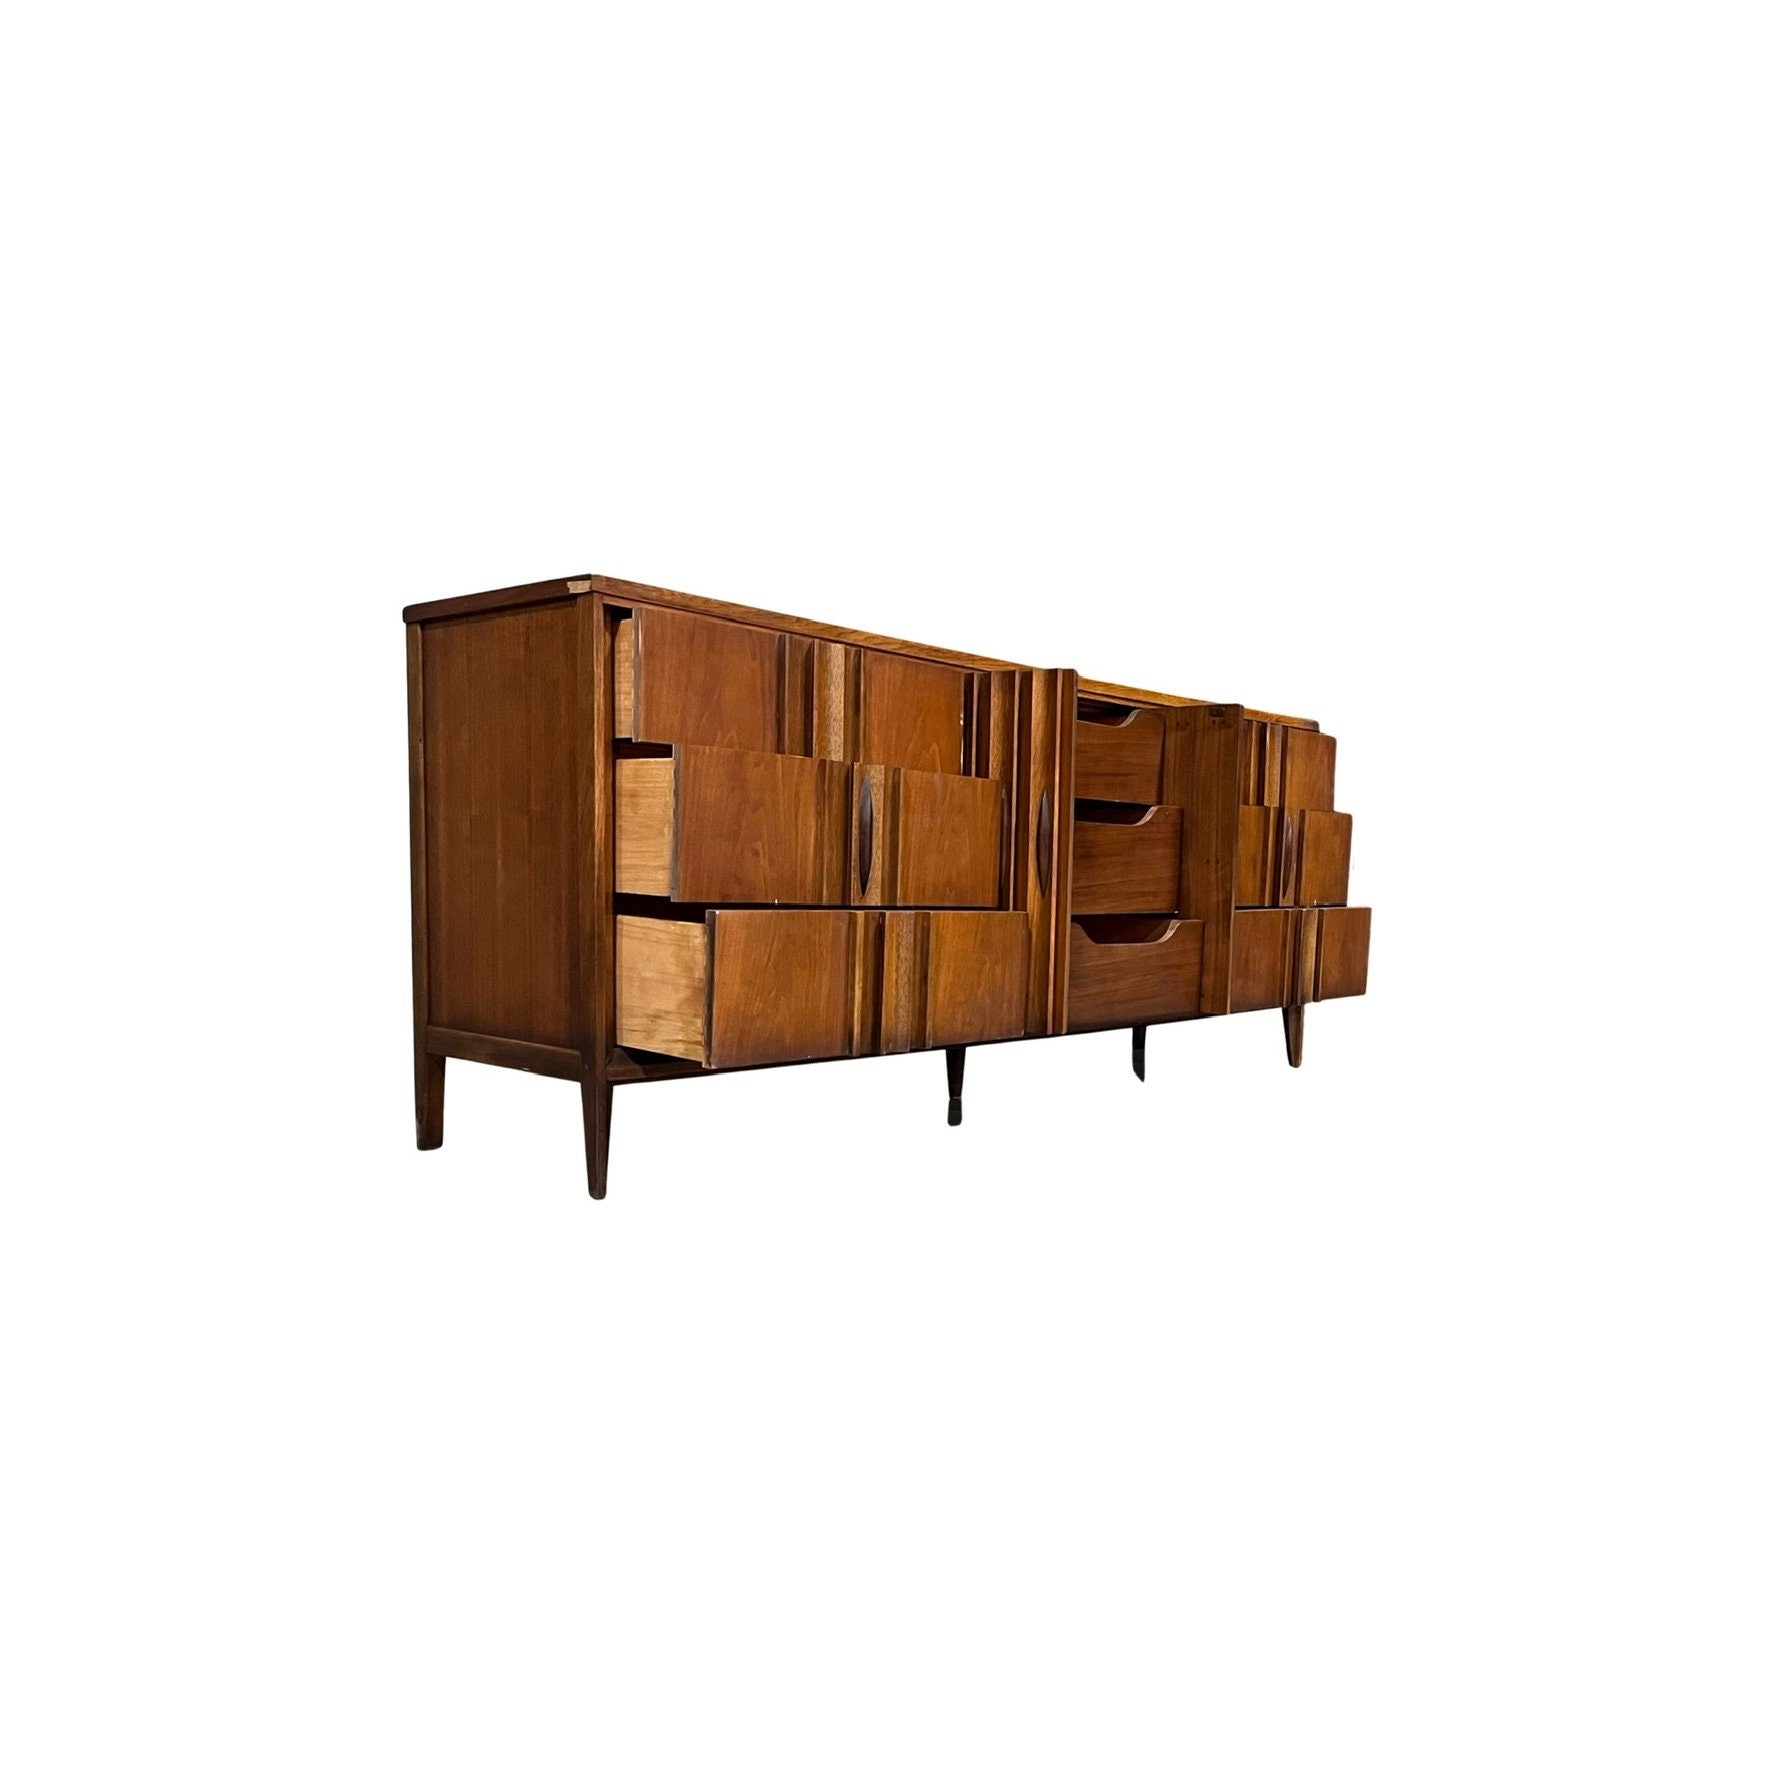 Nine-drawer vintage dresser by Thomasville, offering ample storage and stylish design